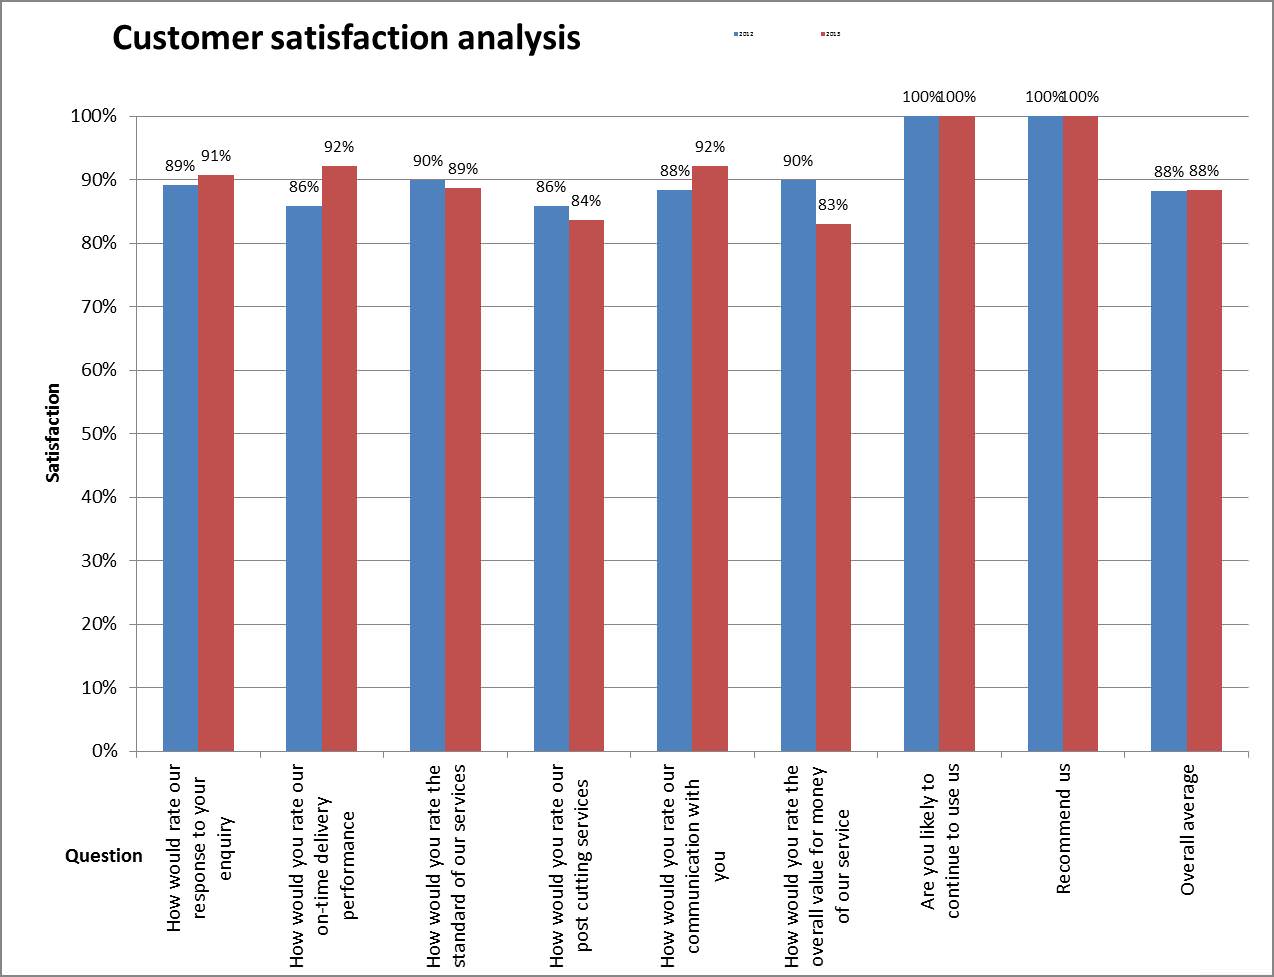 Customer Satisfaction Results 2012 vs 2013